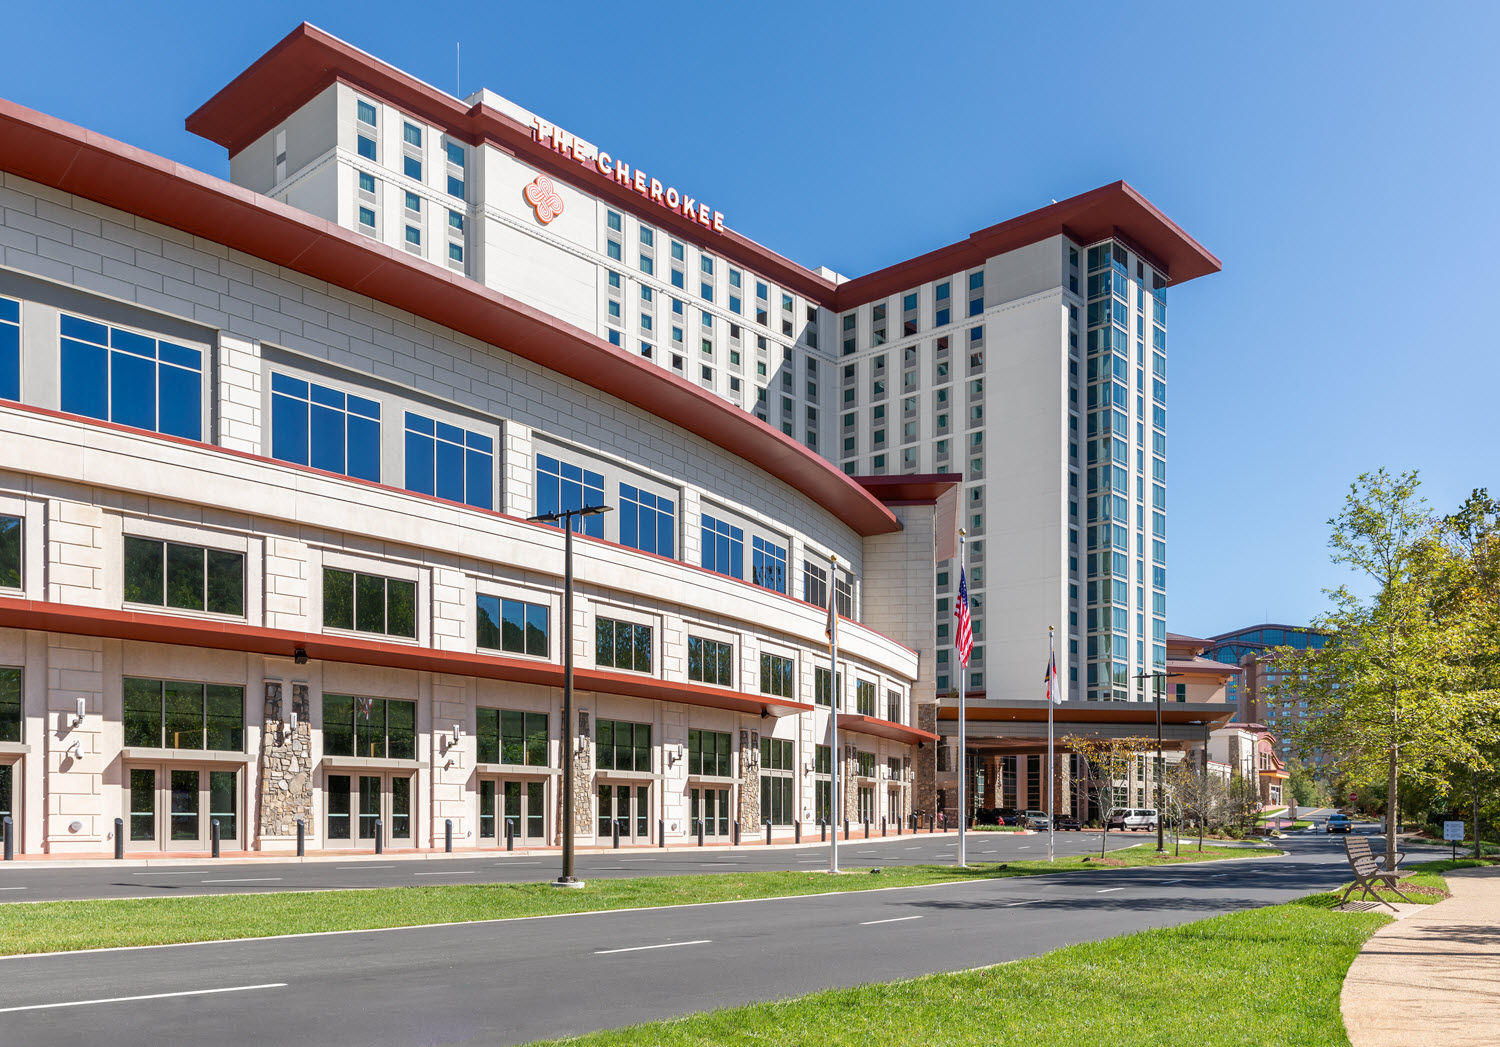 Harrah's Cherokee Casino Resort and The Cherokee Convention Center